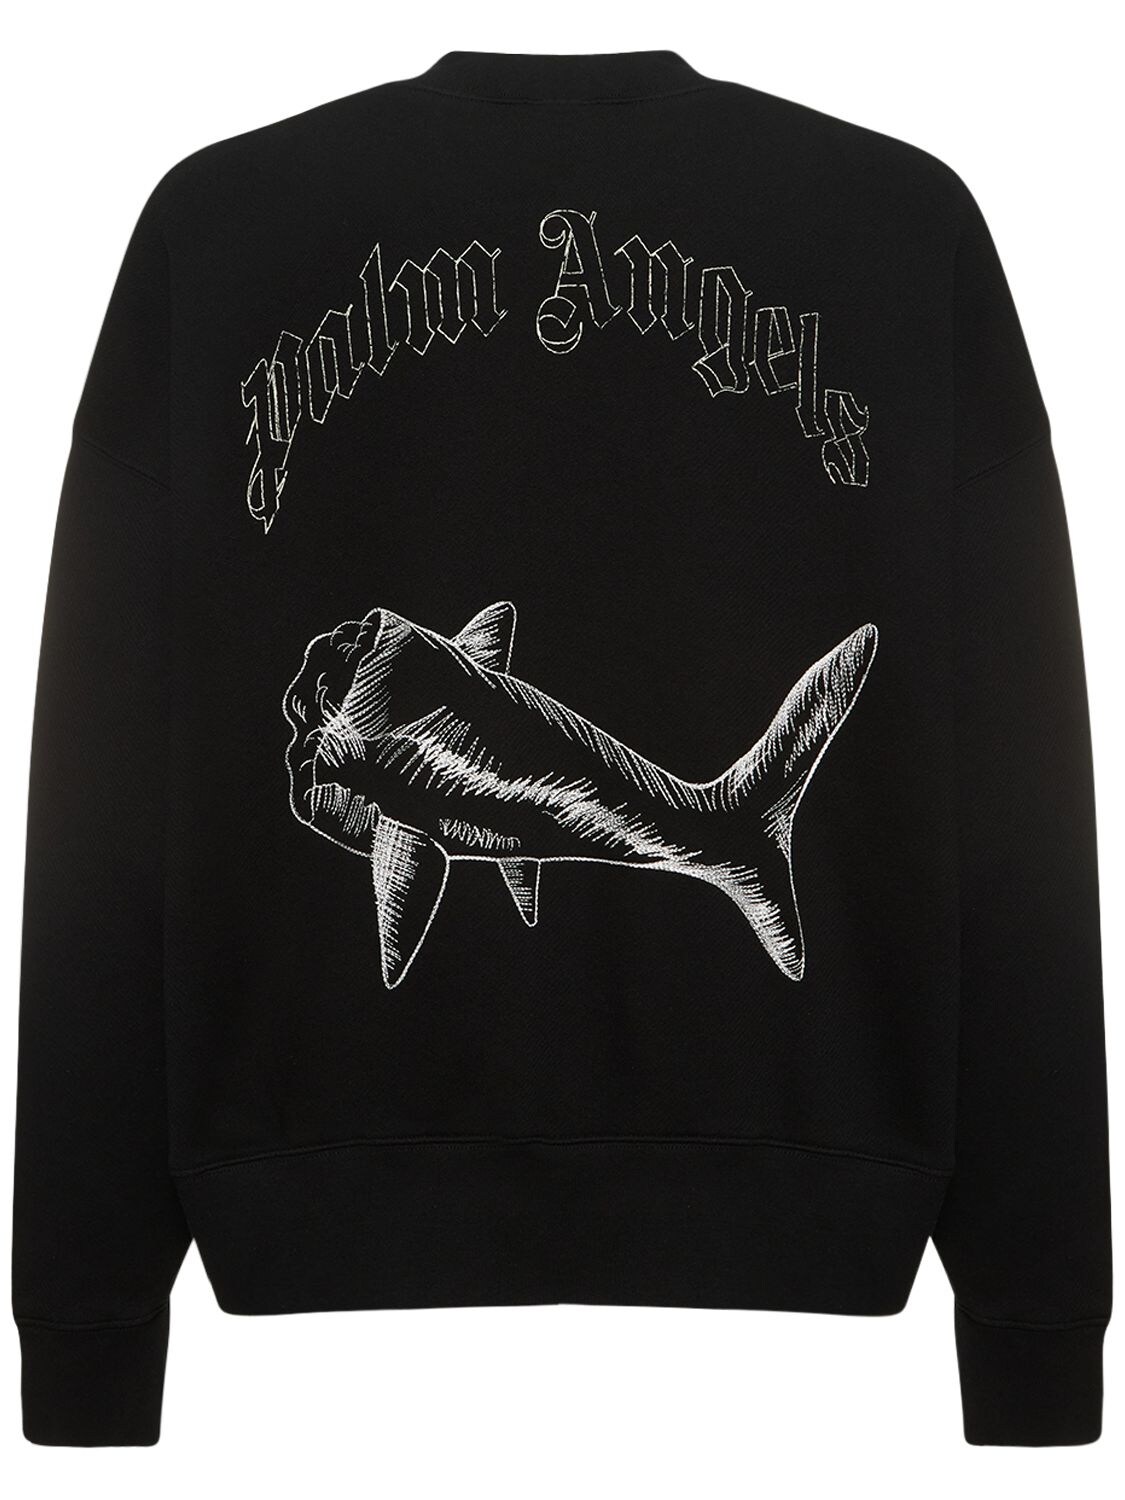 PALM ANGELS Split Shark Crewneck Sweatshirt